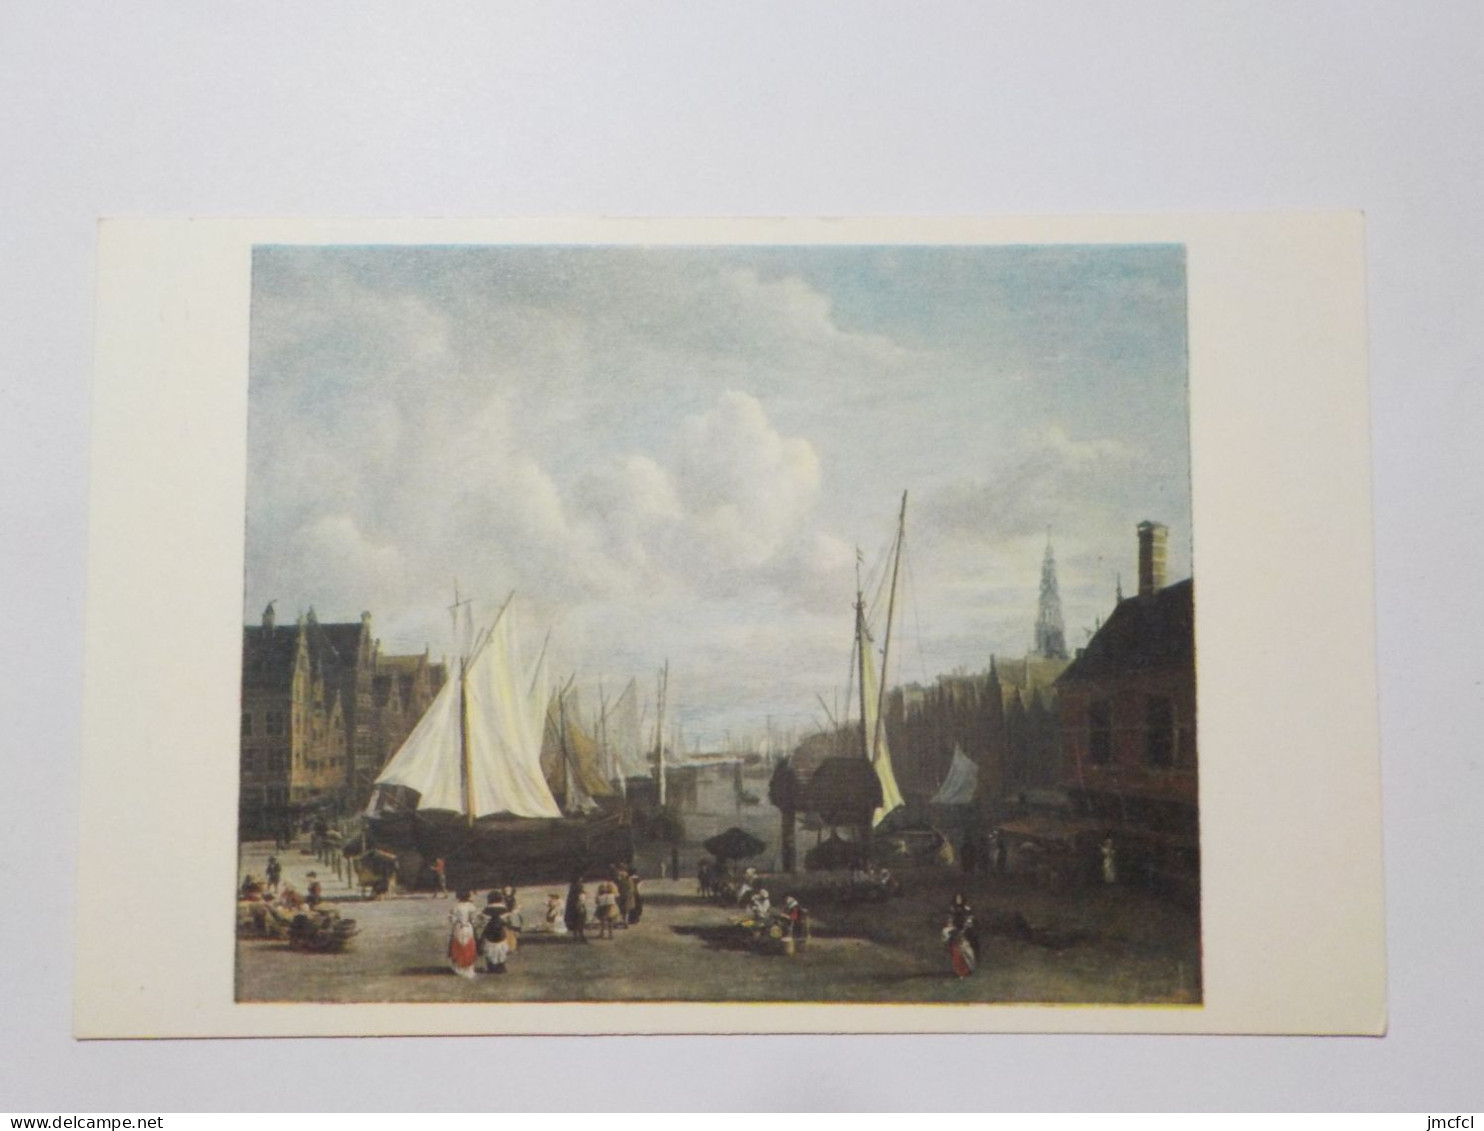 THE FRICK COLLECTION  "  Quay At Amsterdam"   Jacob Van Ruisdael - Museums